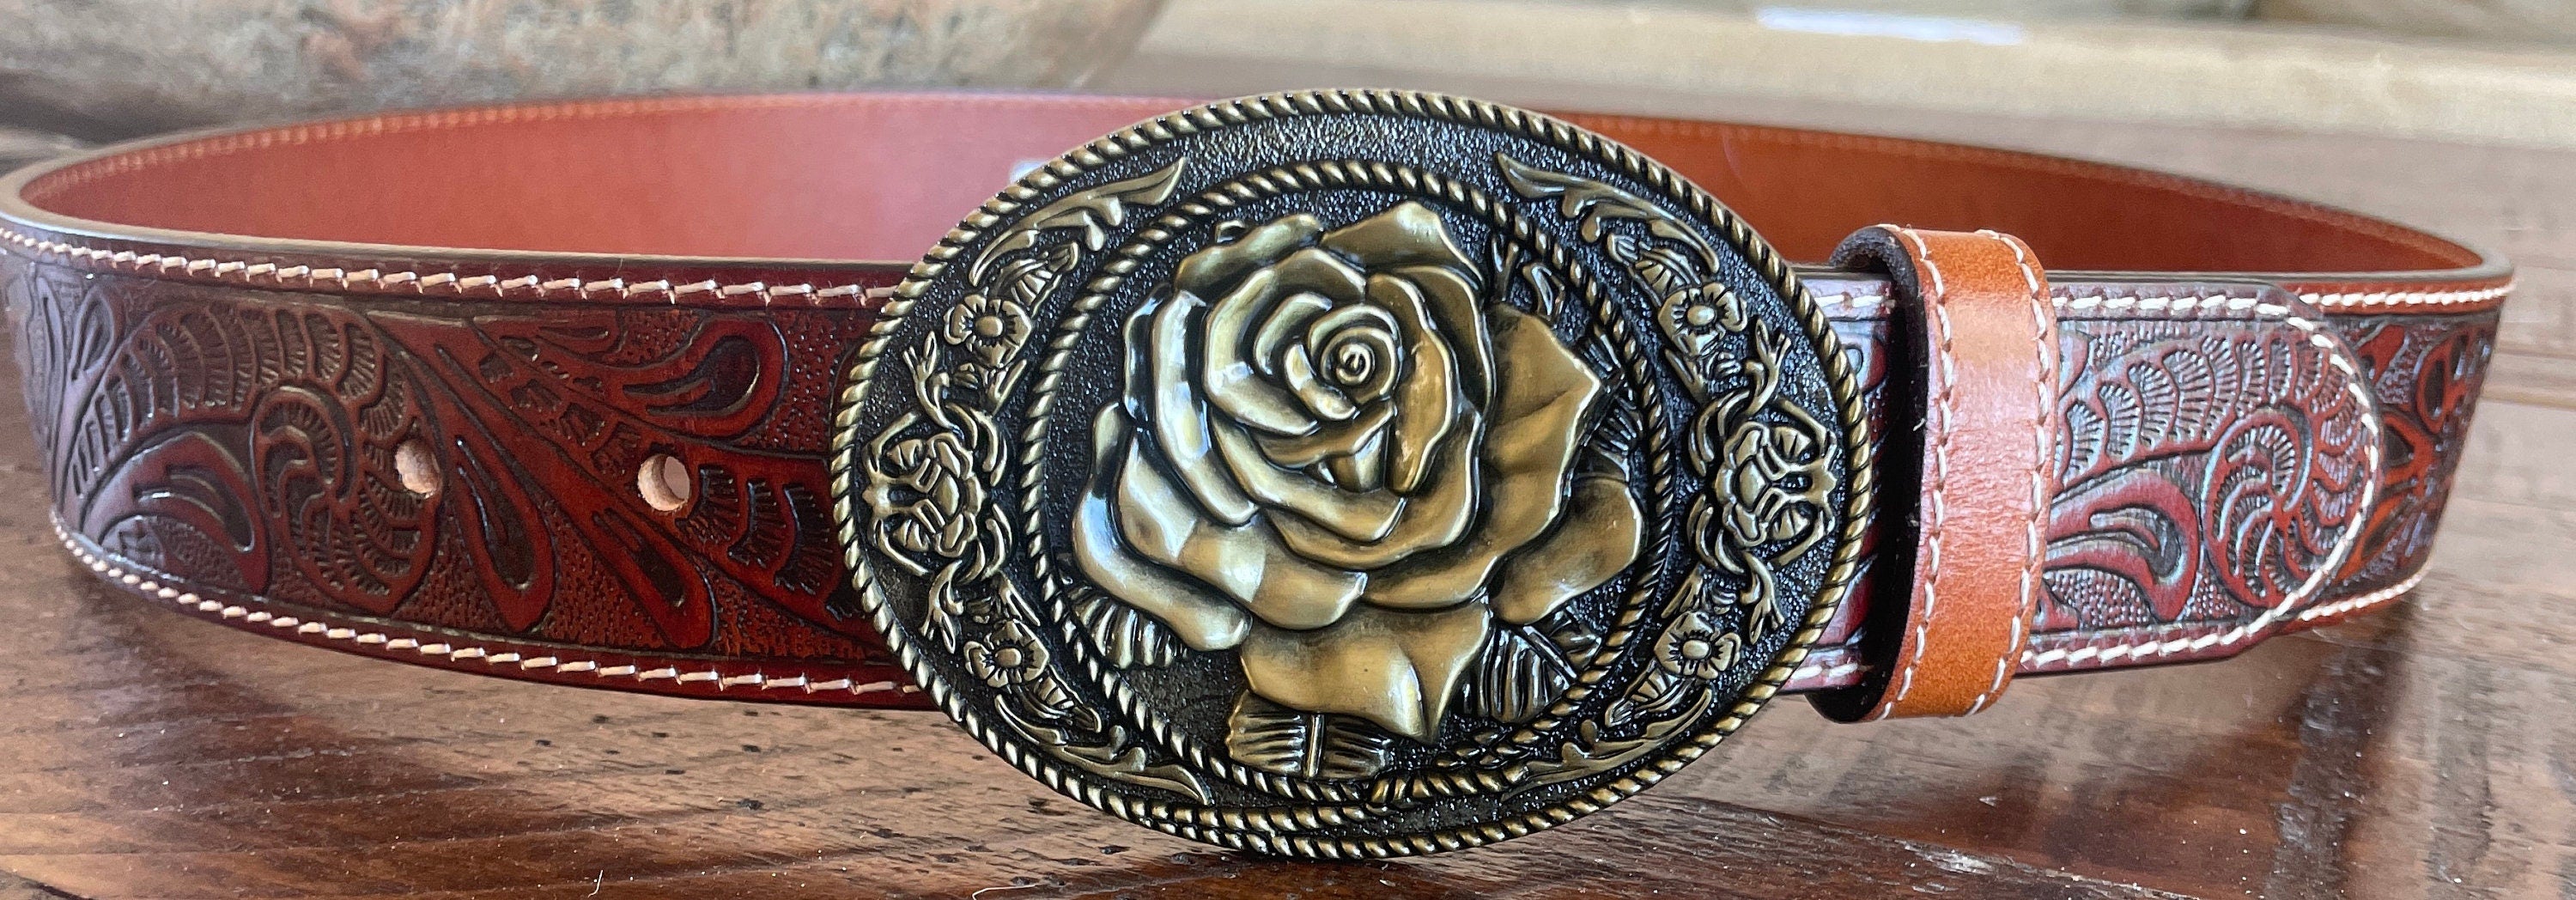 Rose Buckle Tooled Leather Belt